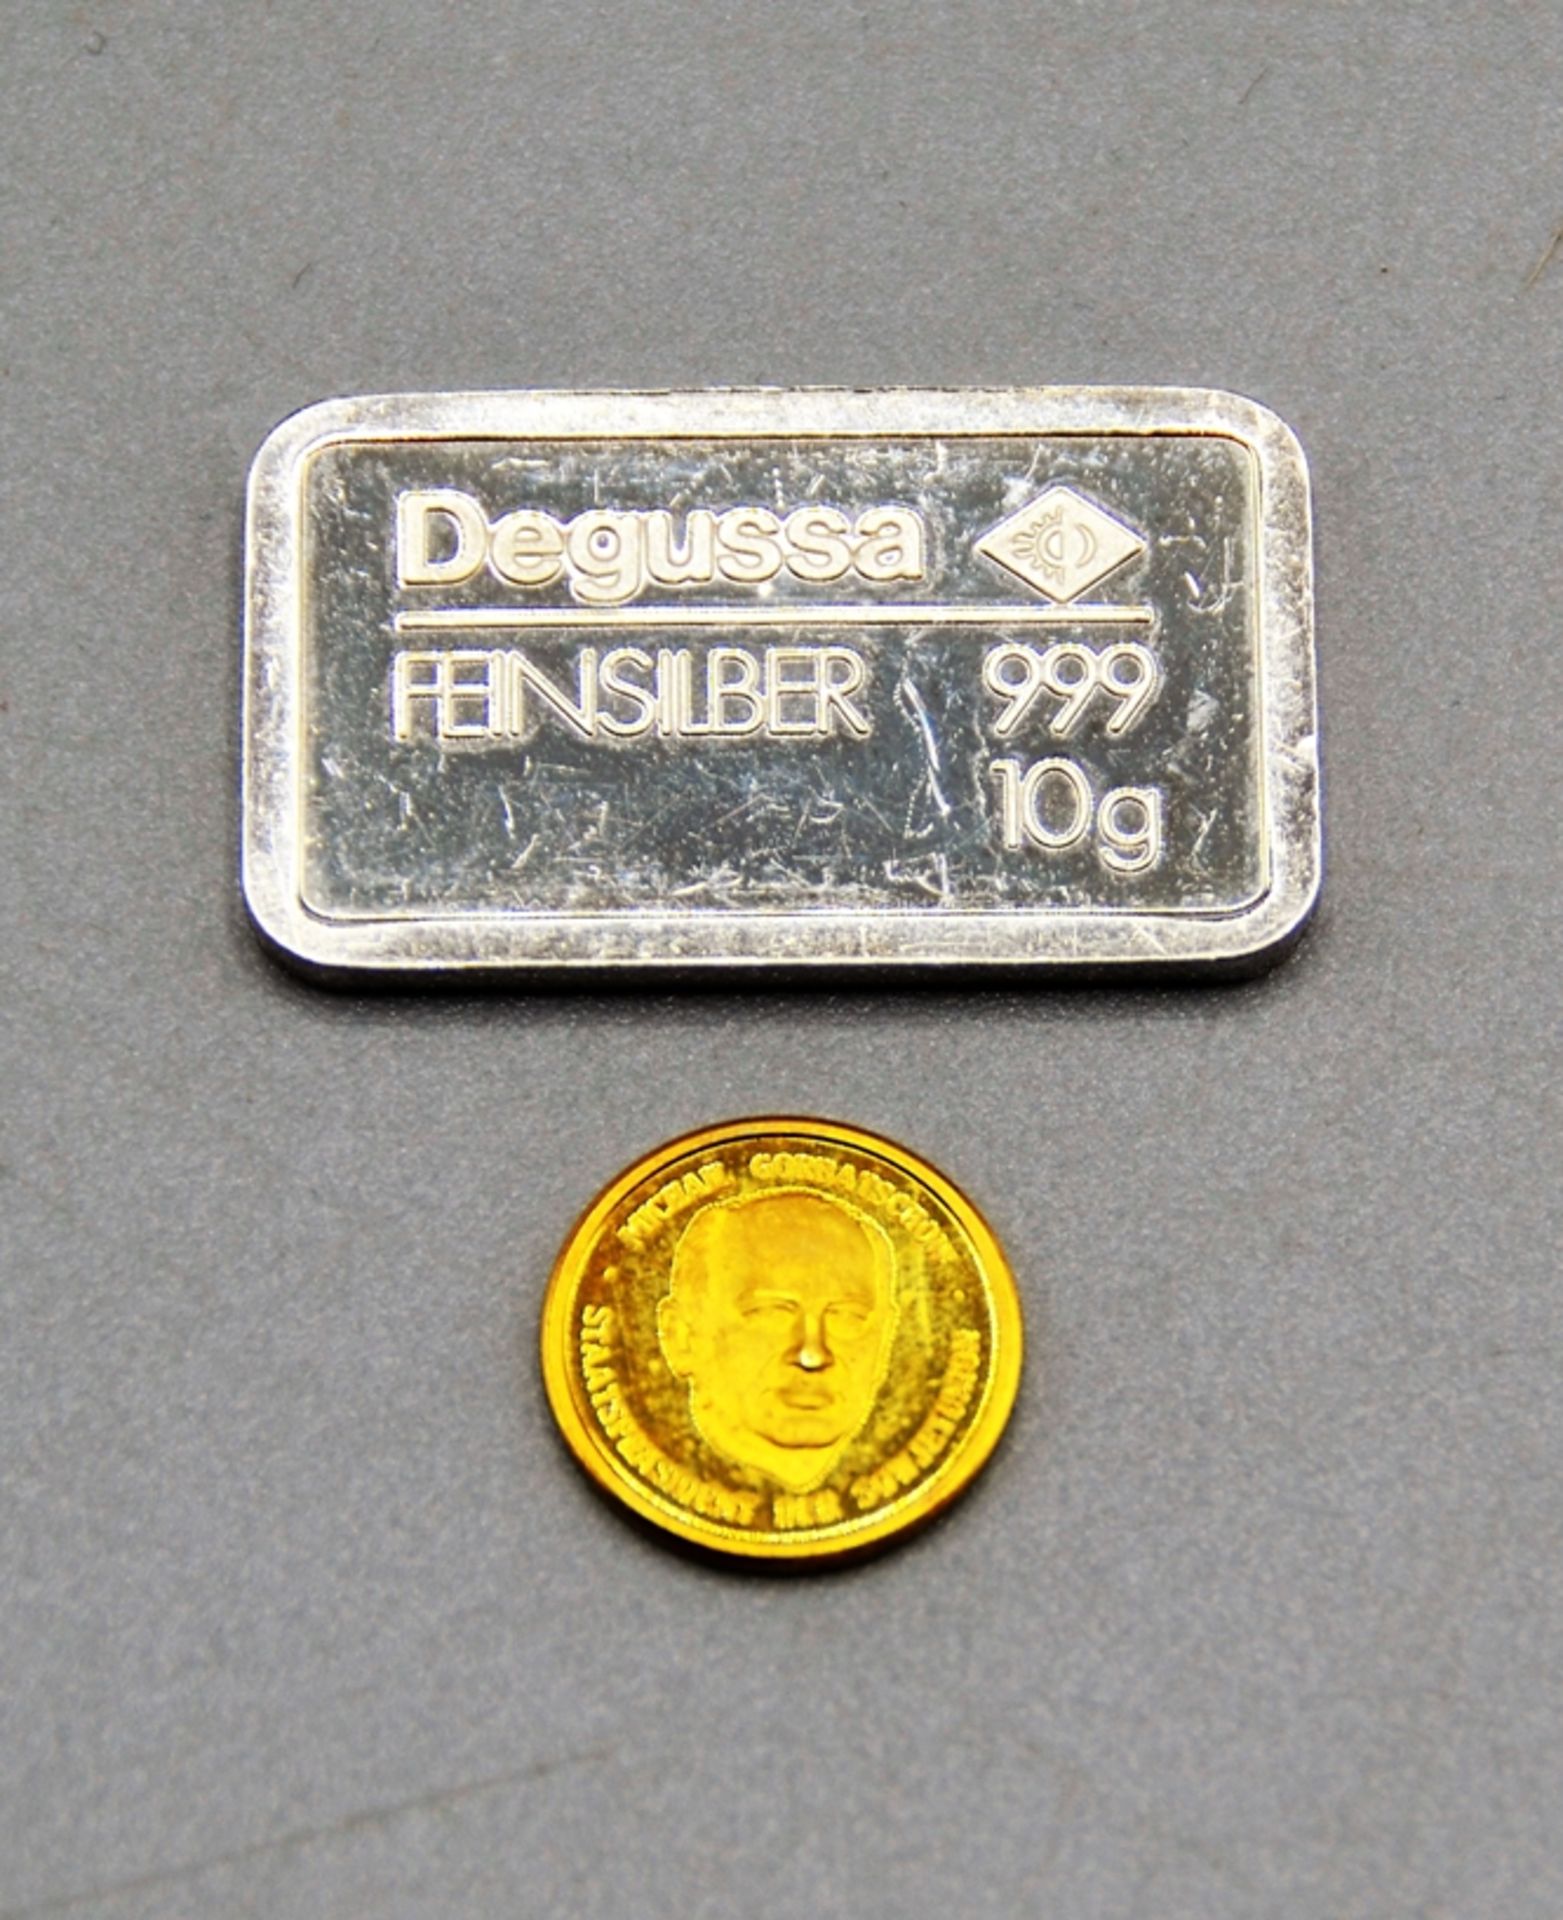 Konvolut Gold Medaille u. kleiner Silber Barren, Degussa 10 g Feinsilber Barren, Gold Medaille Mich